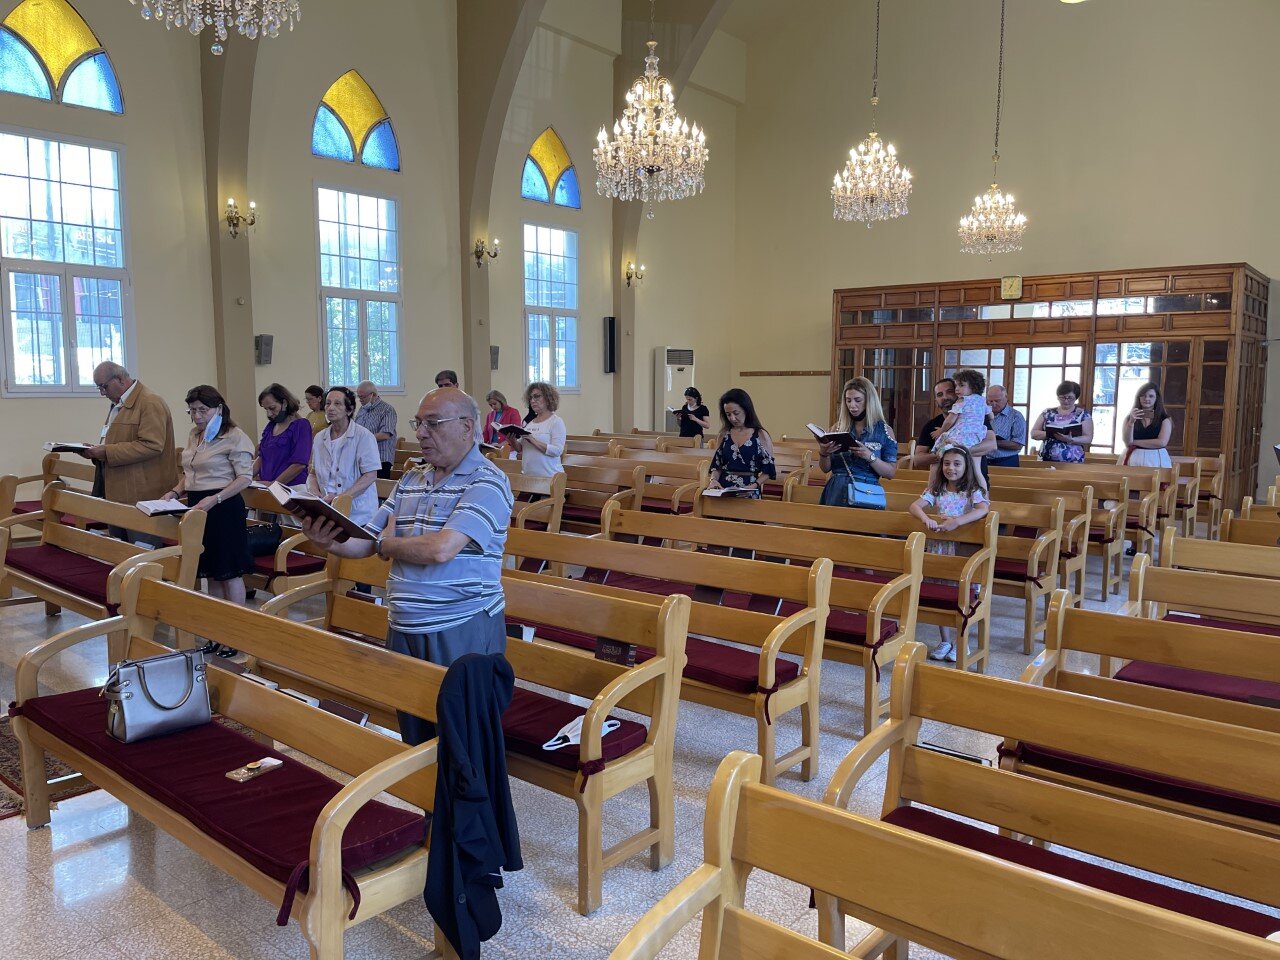  Pentecost Sunday at Tripoli Presbyterian Church  